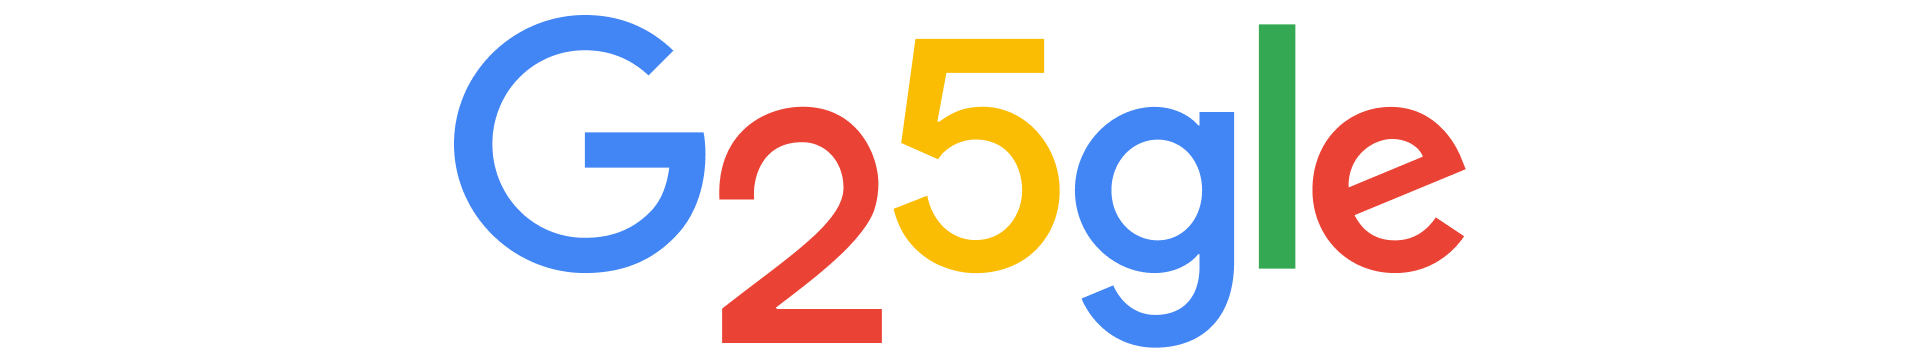 Google's 25th Visual Assets